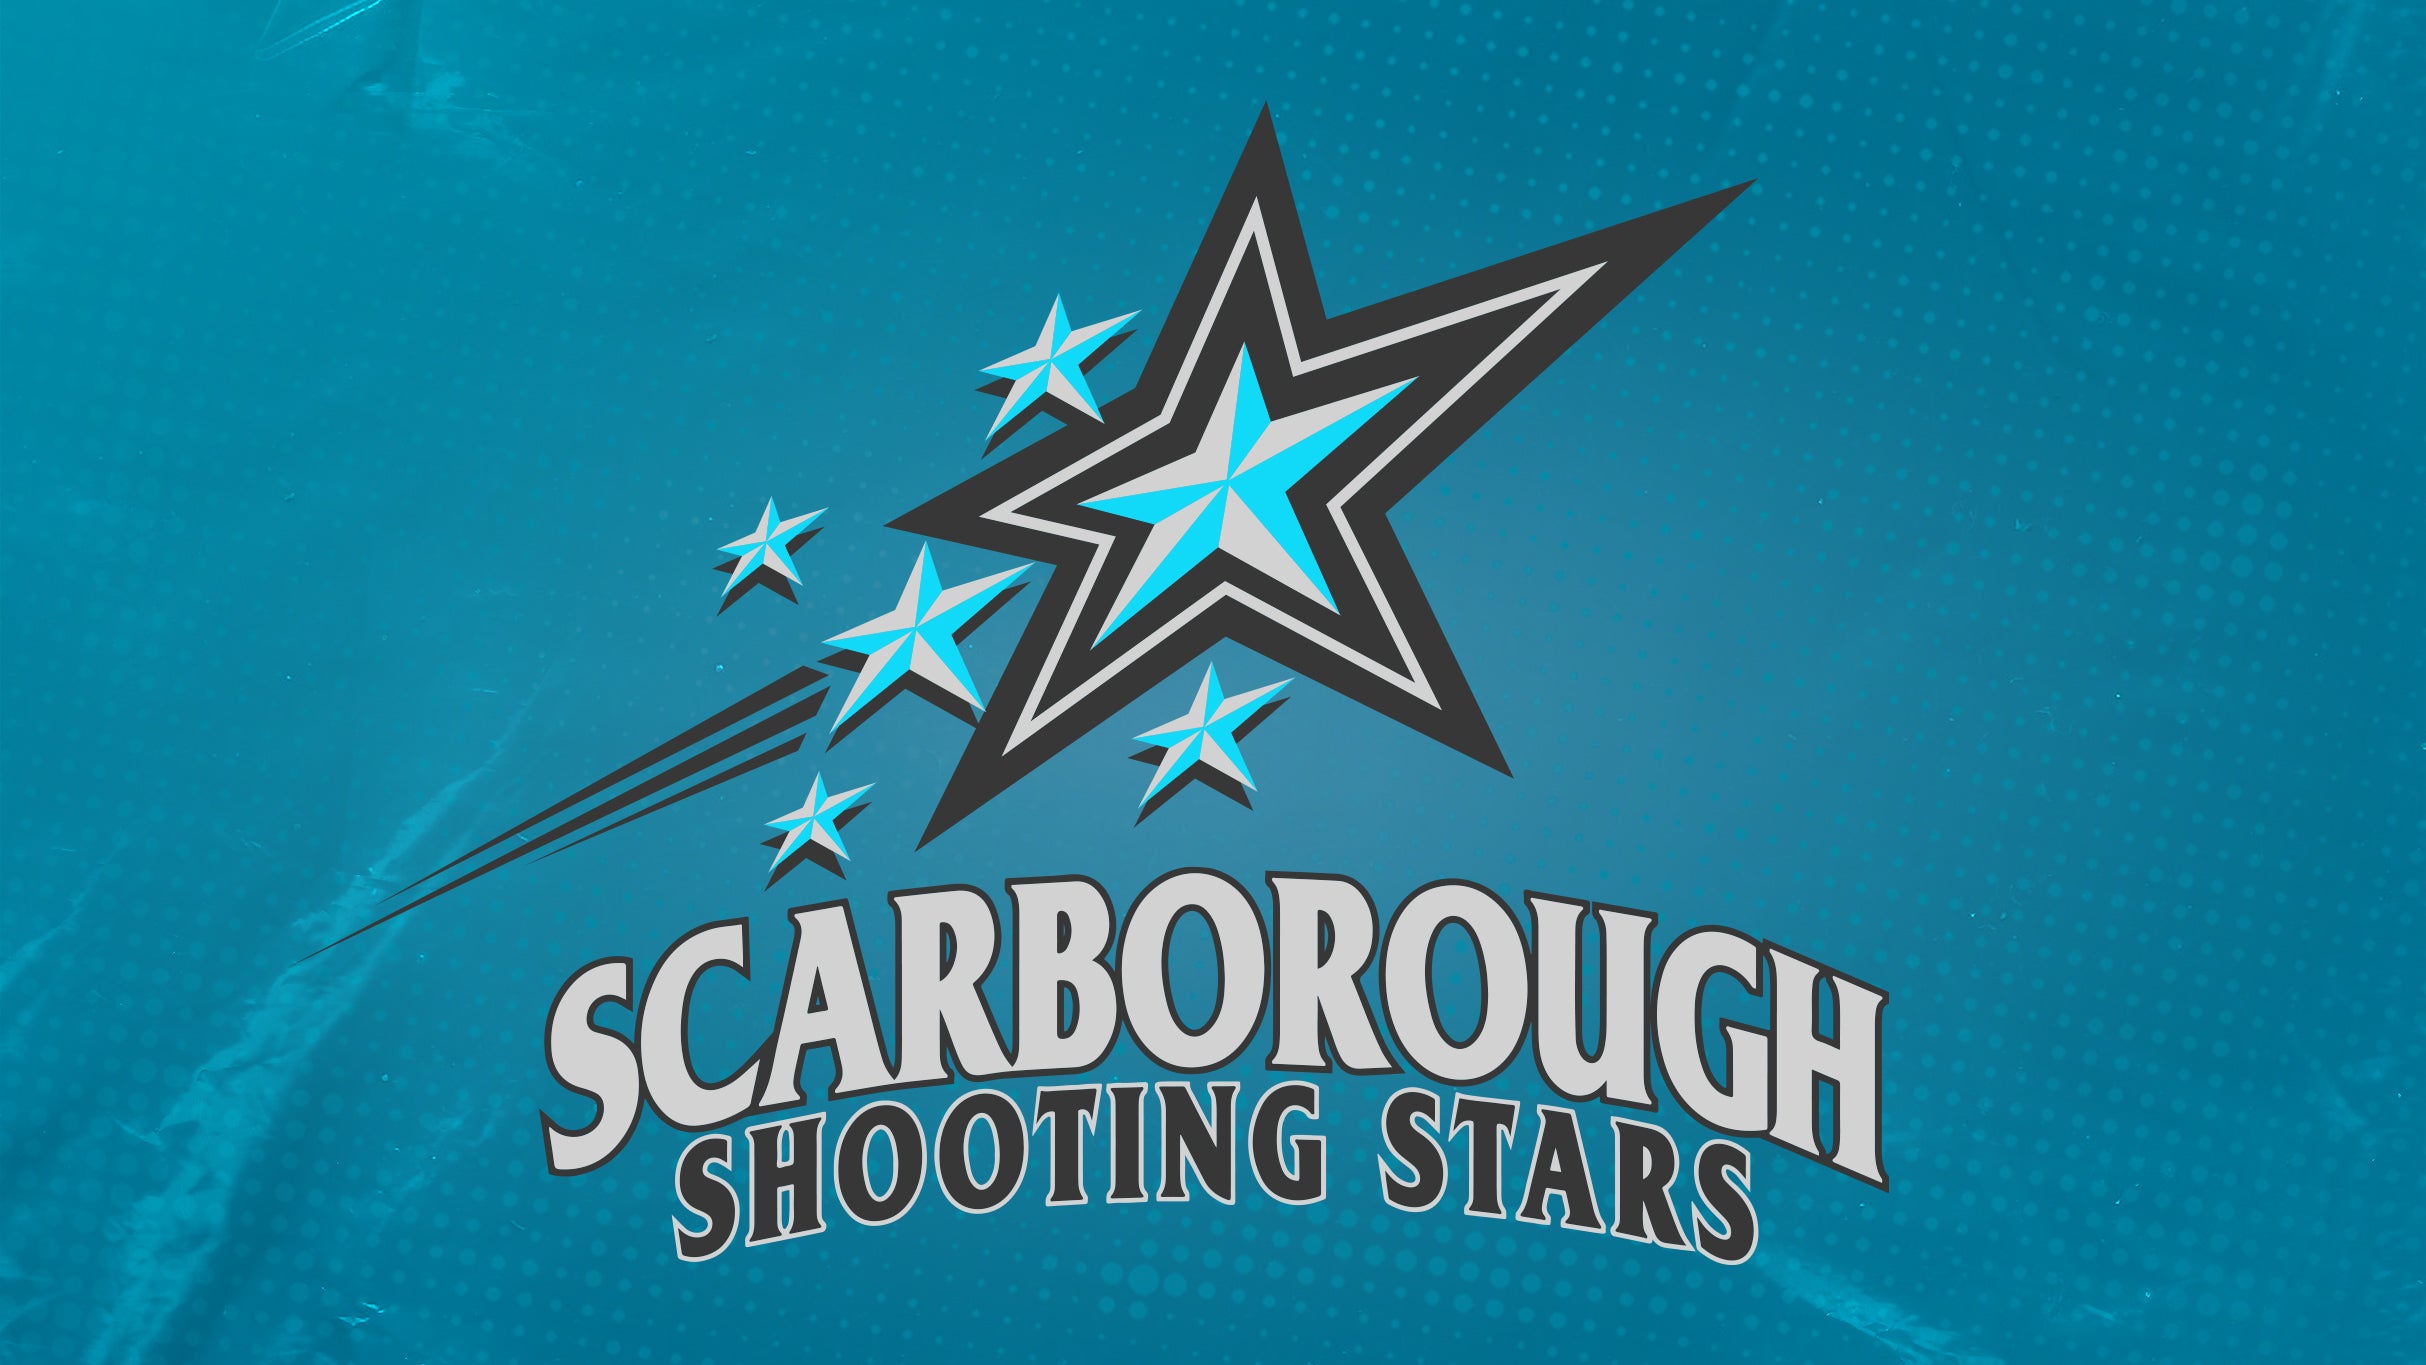 Scarborough Shooting Stars vs. Brampton Honey Badgers presale code for advance tickets in Toronto